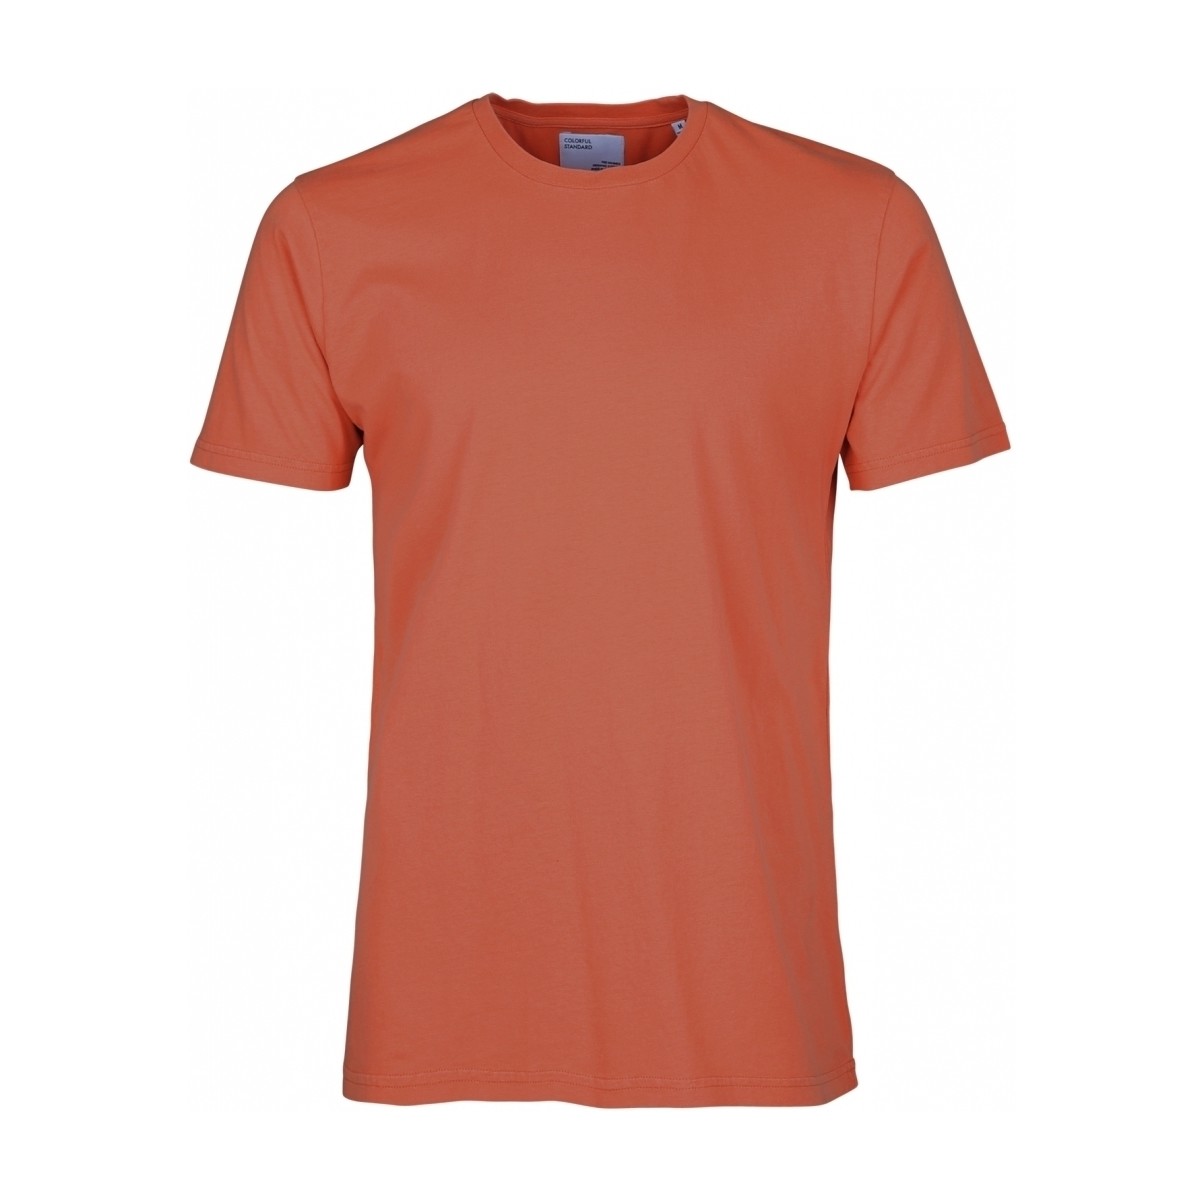 Textiel T-shirts korte mouwen Colorful Standard T-shirt  Classic Organic dark amber Rood